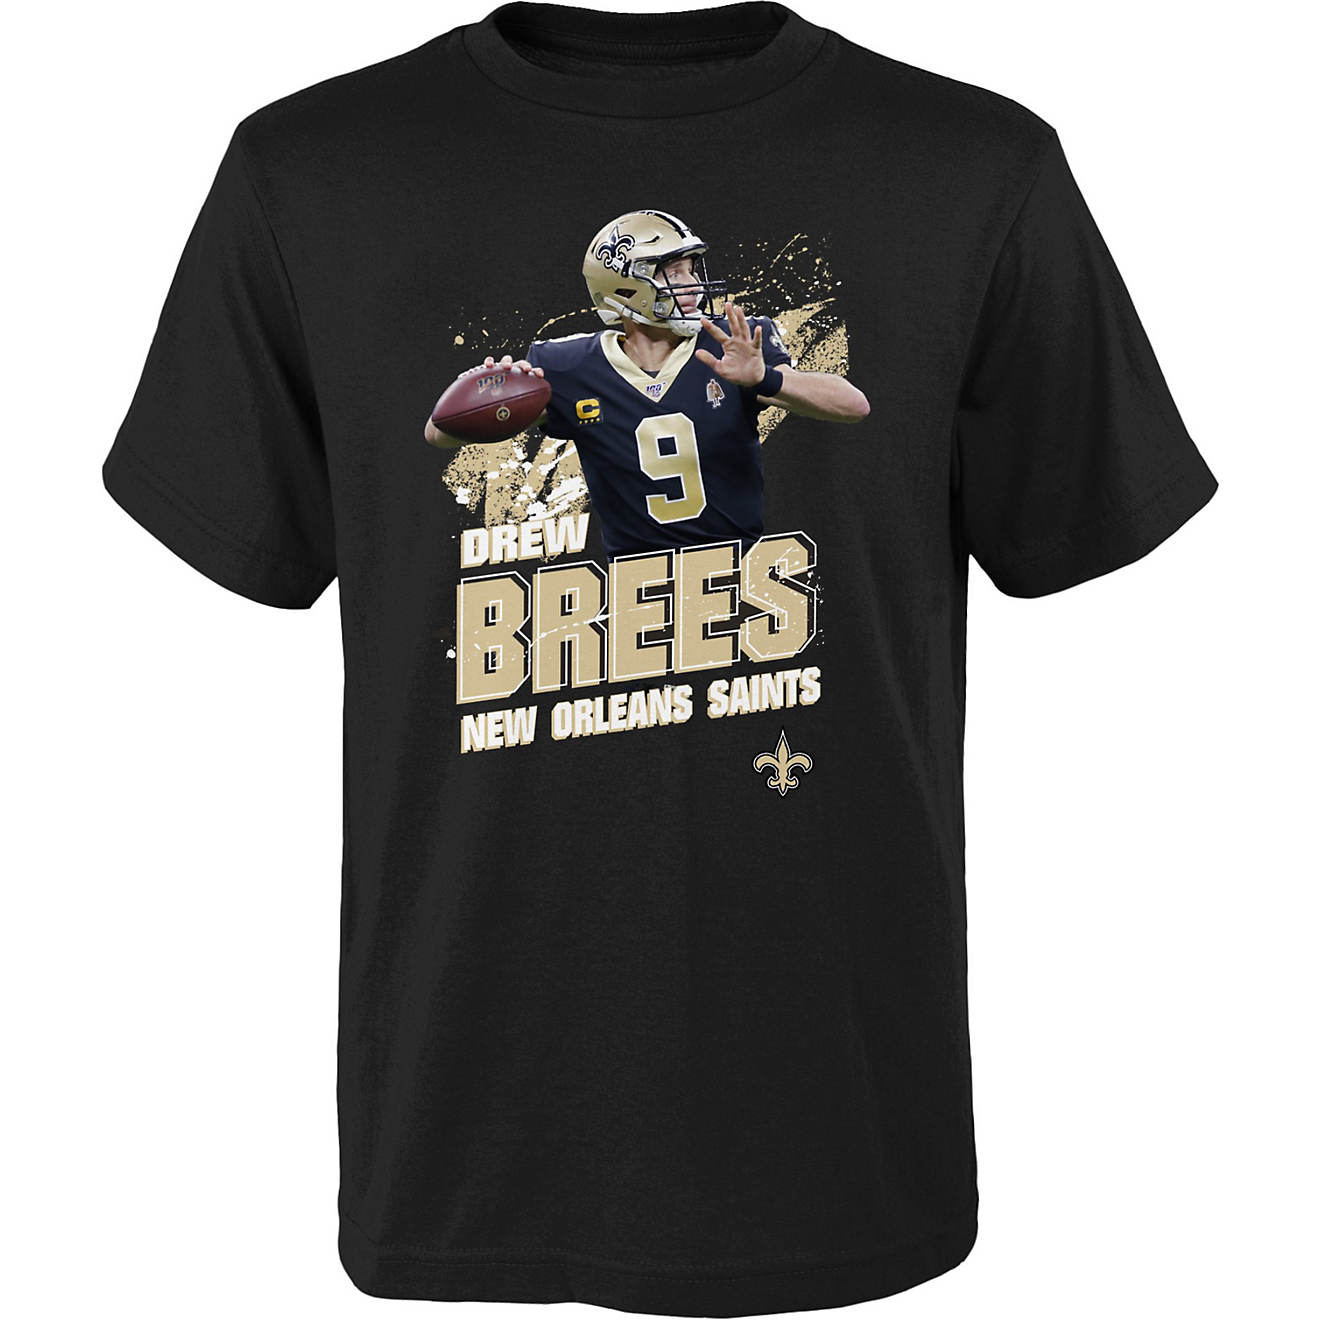 NFL Boys’ New Orleans Saints Drew Brees Graphic T-shirt                                                                        - view number 1